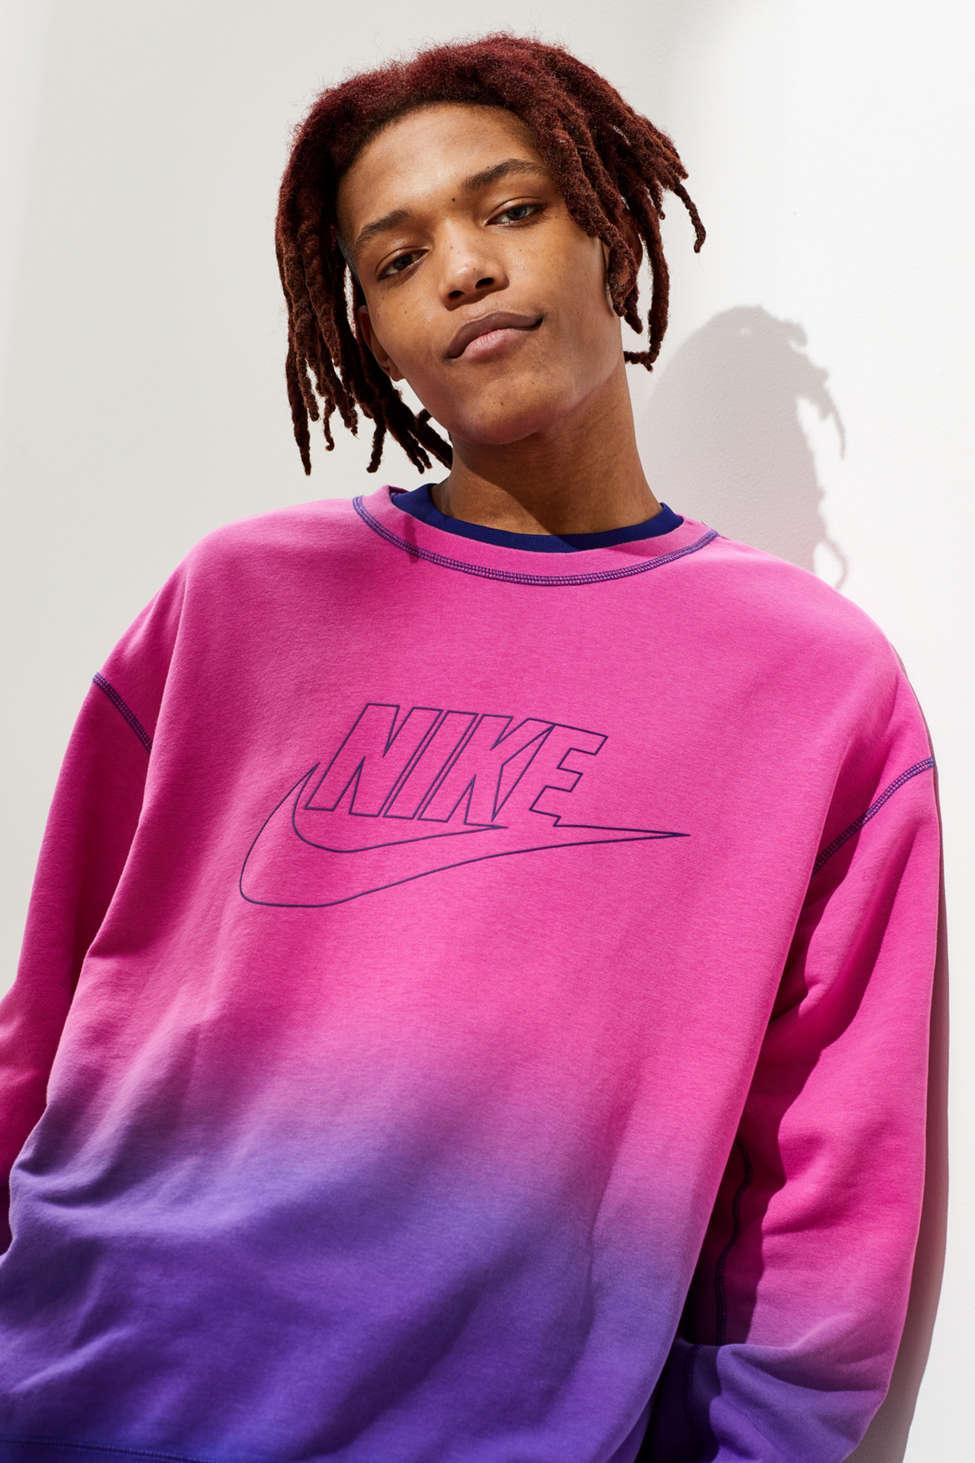 Urban Outfitters x Nike Nike Gradient Fleece Crew Neck Sweatshirt in Pink  for Men - Lyst